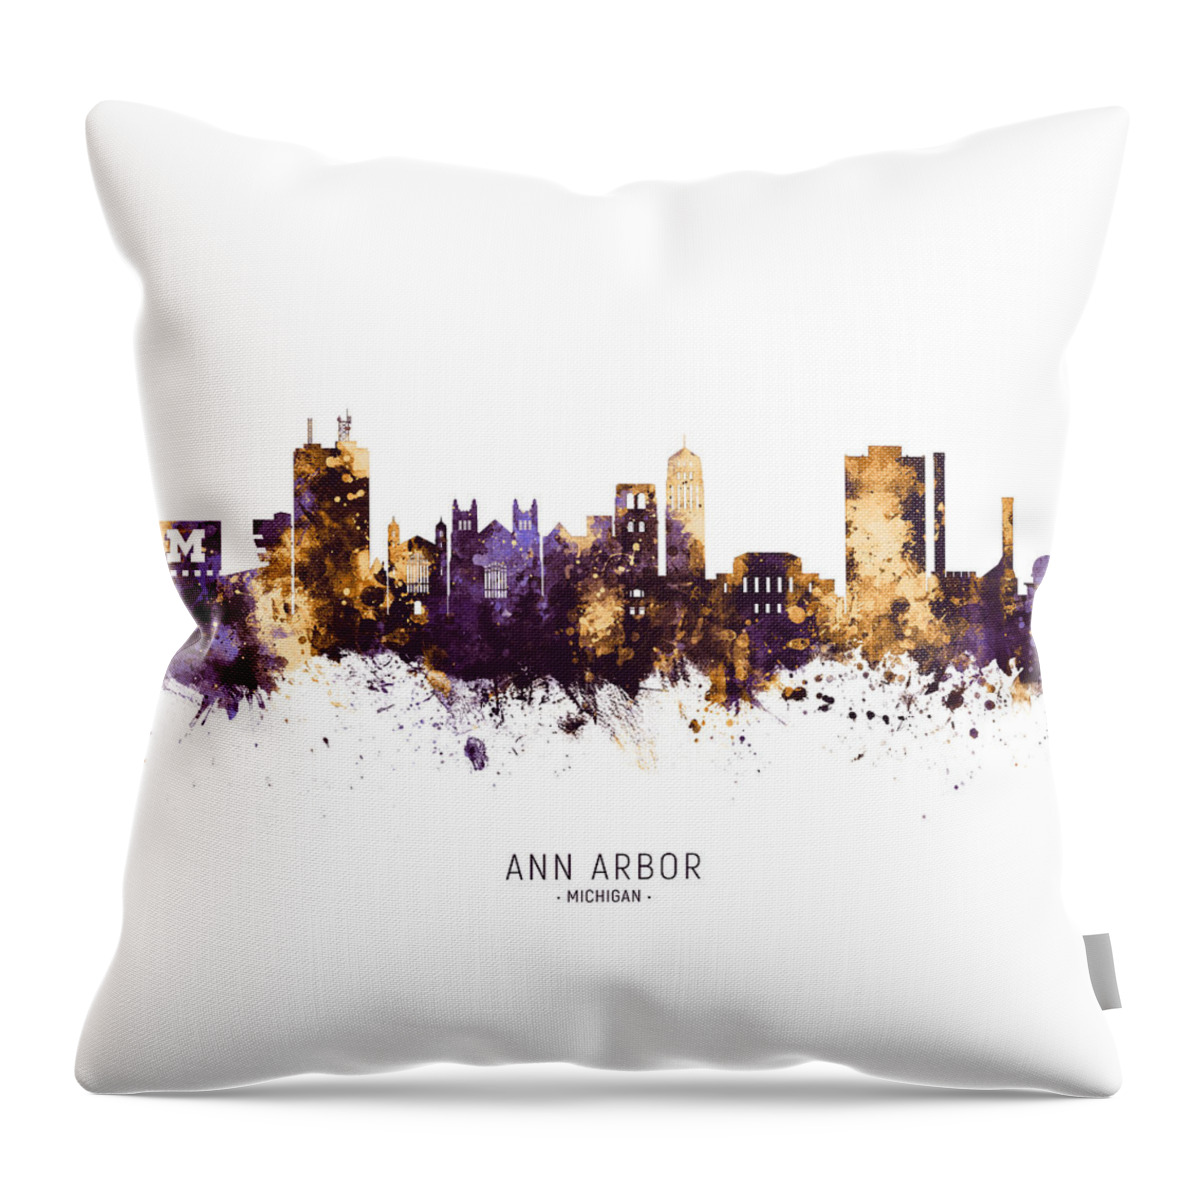 Ann Arbor Throw Pillow featuring the digital art Ann Arbor Michigan Skyline by Michael Tompsett